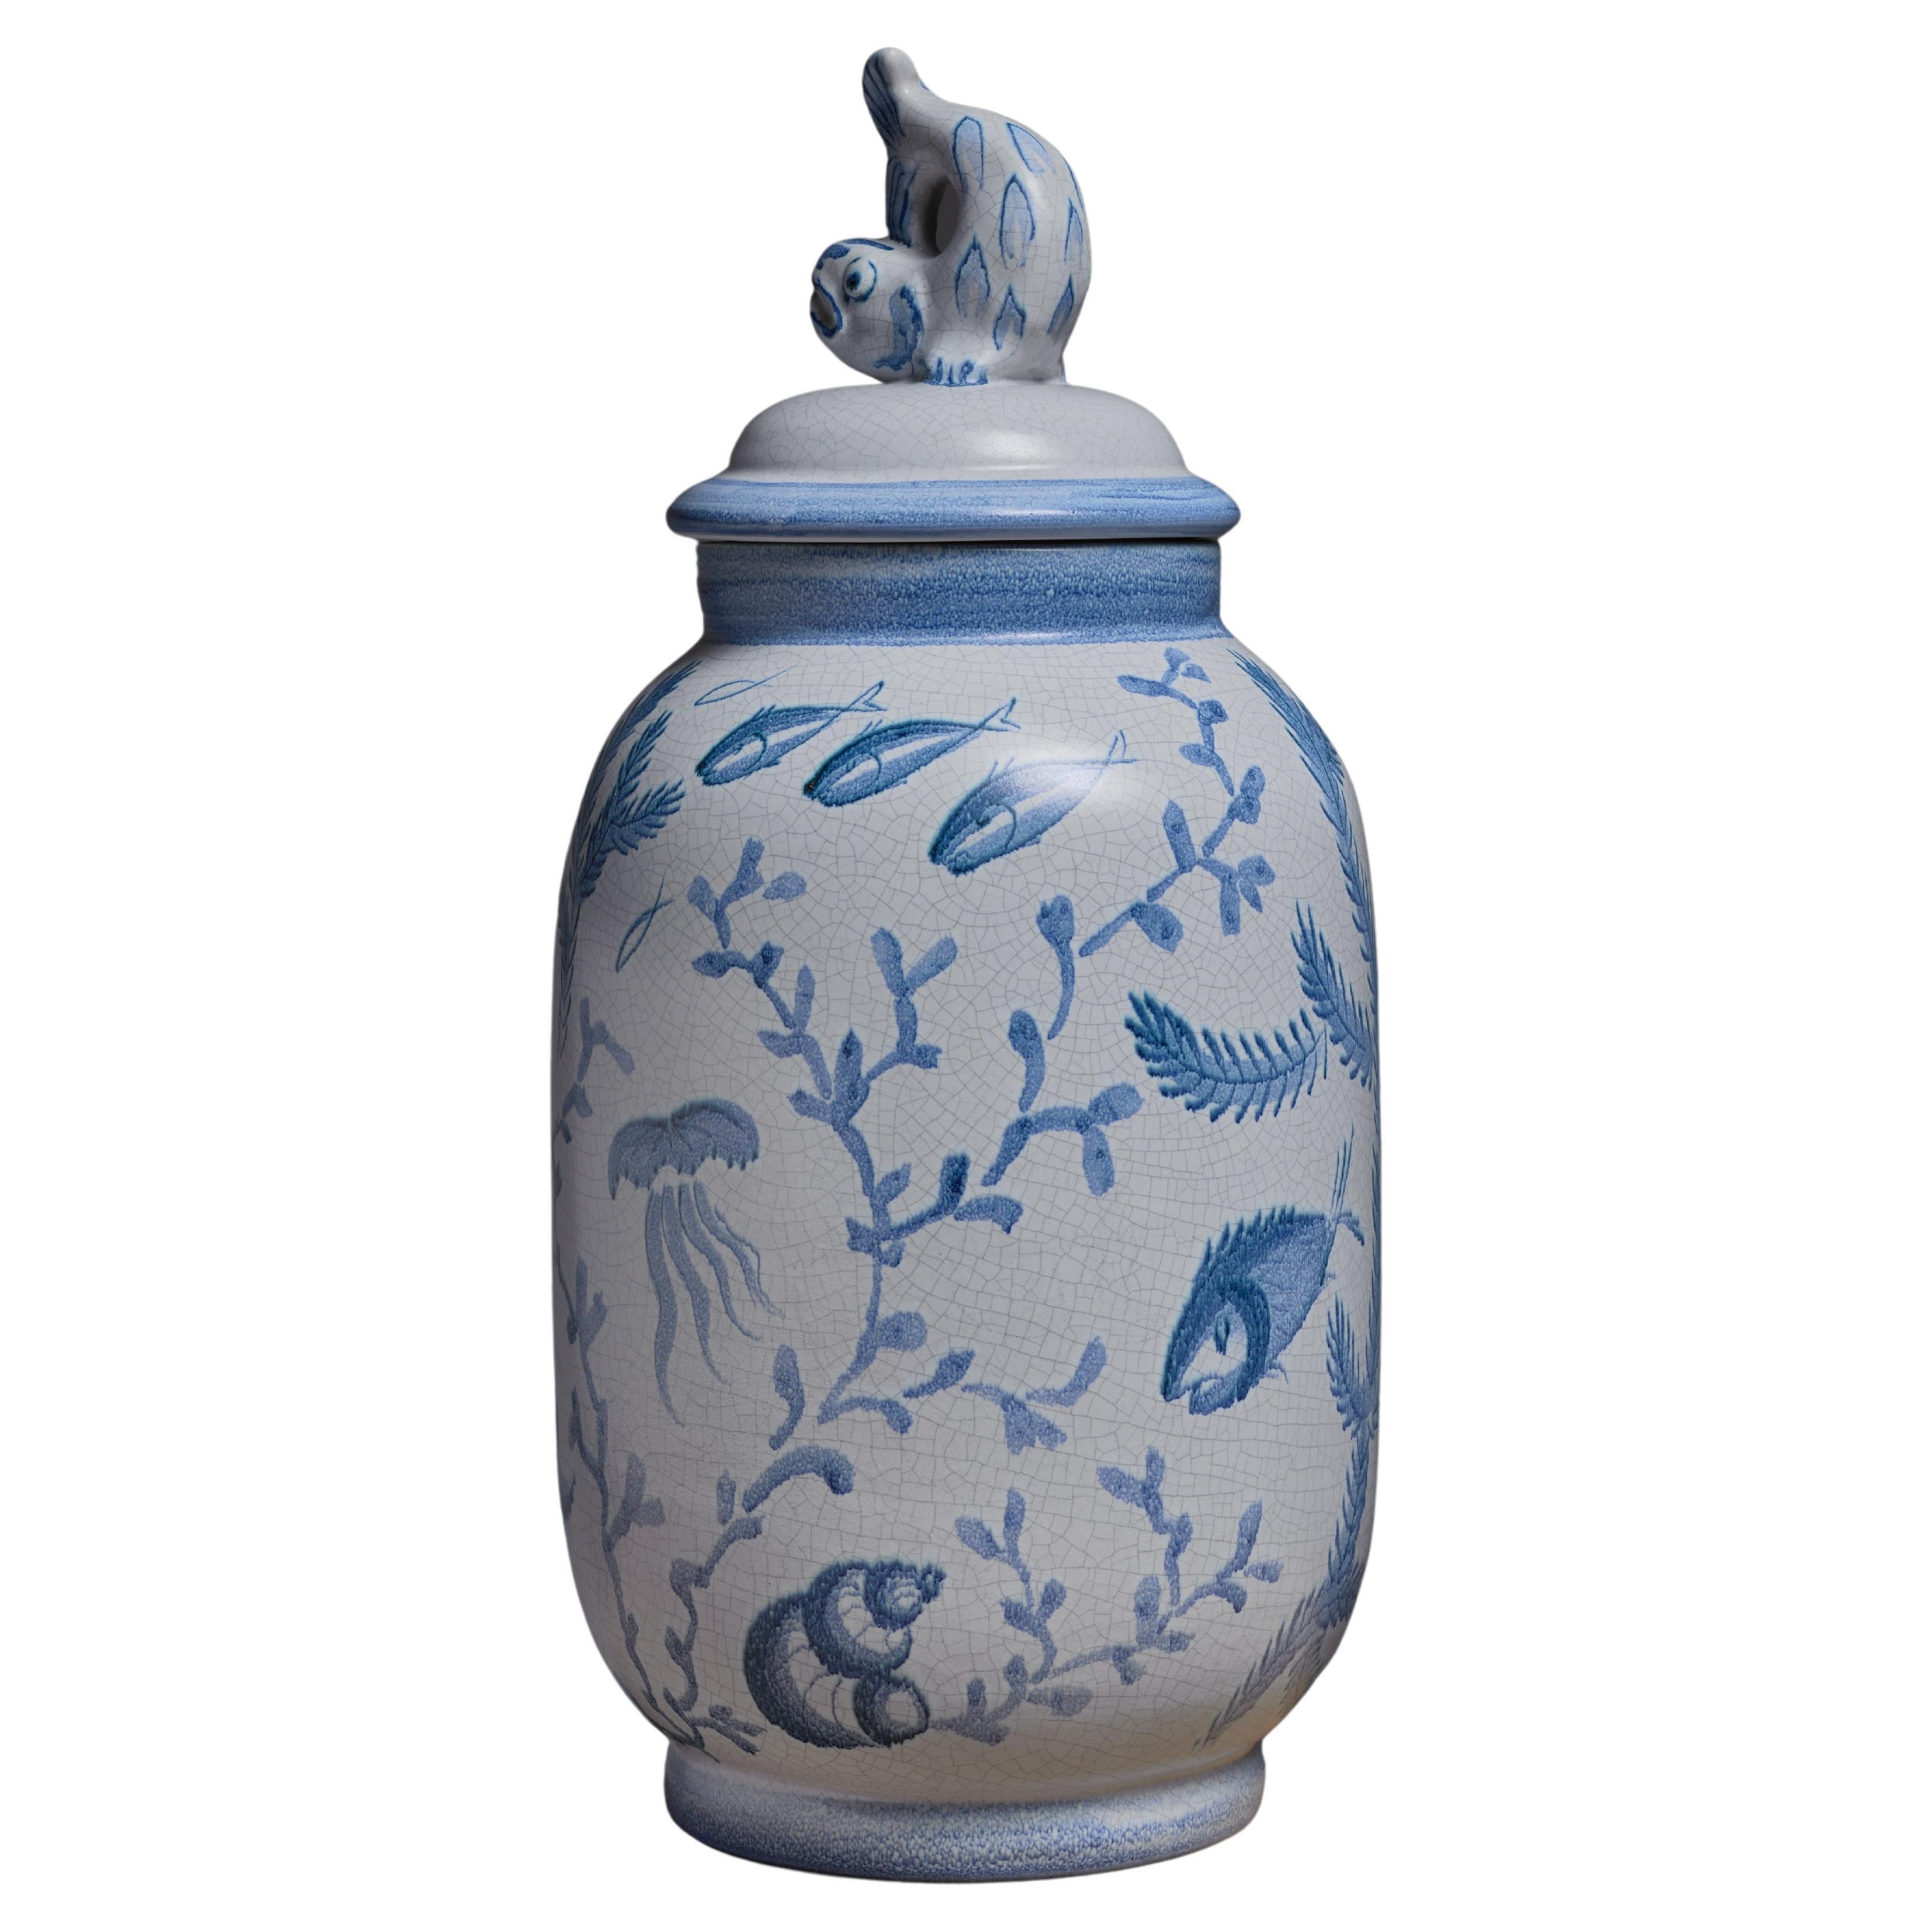 A ceramic vase by Eva Jancke-Bjork for Bo Fajans, Sweden. The vase has blue decorations of fish, algae etc. The lid is decorated with a dolphin figure.
The vase is signed by Jancke-Bjork and Bo Fajans underneath.

Eva Jancke-Bjork (1882-1981) was